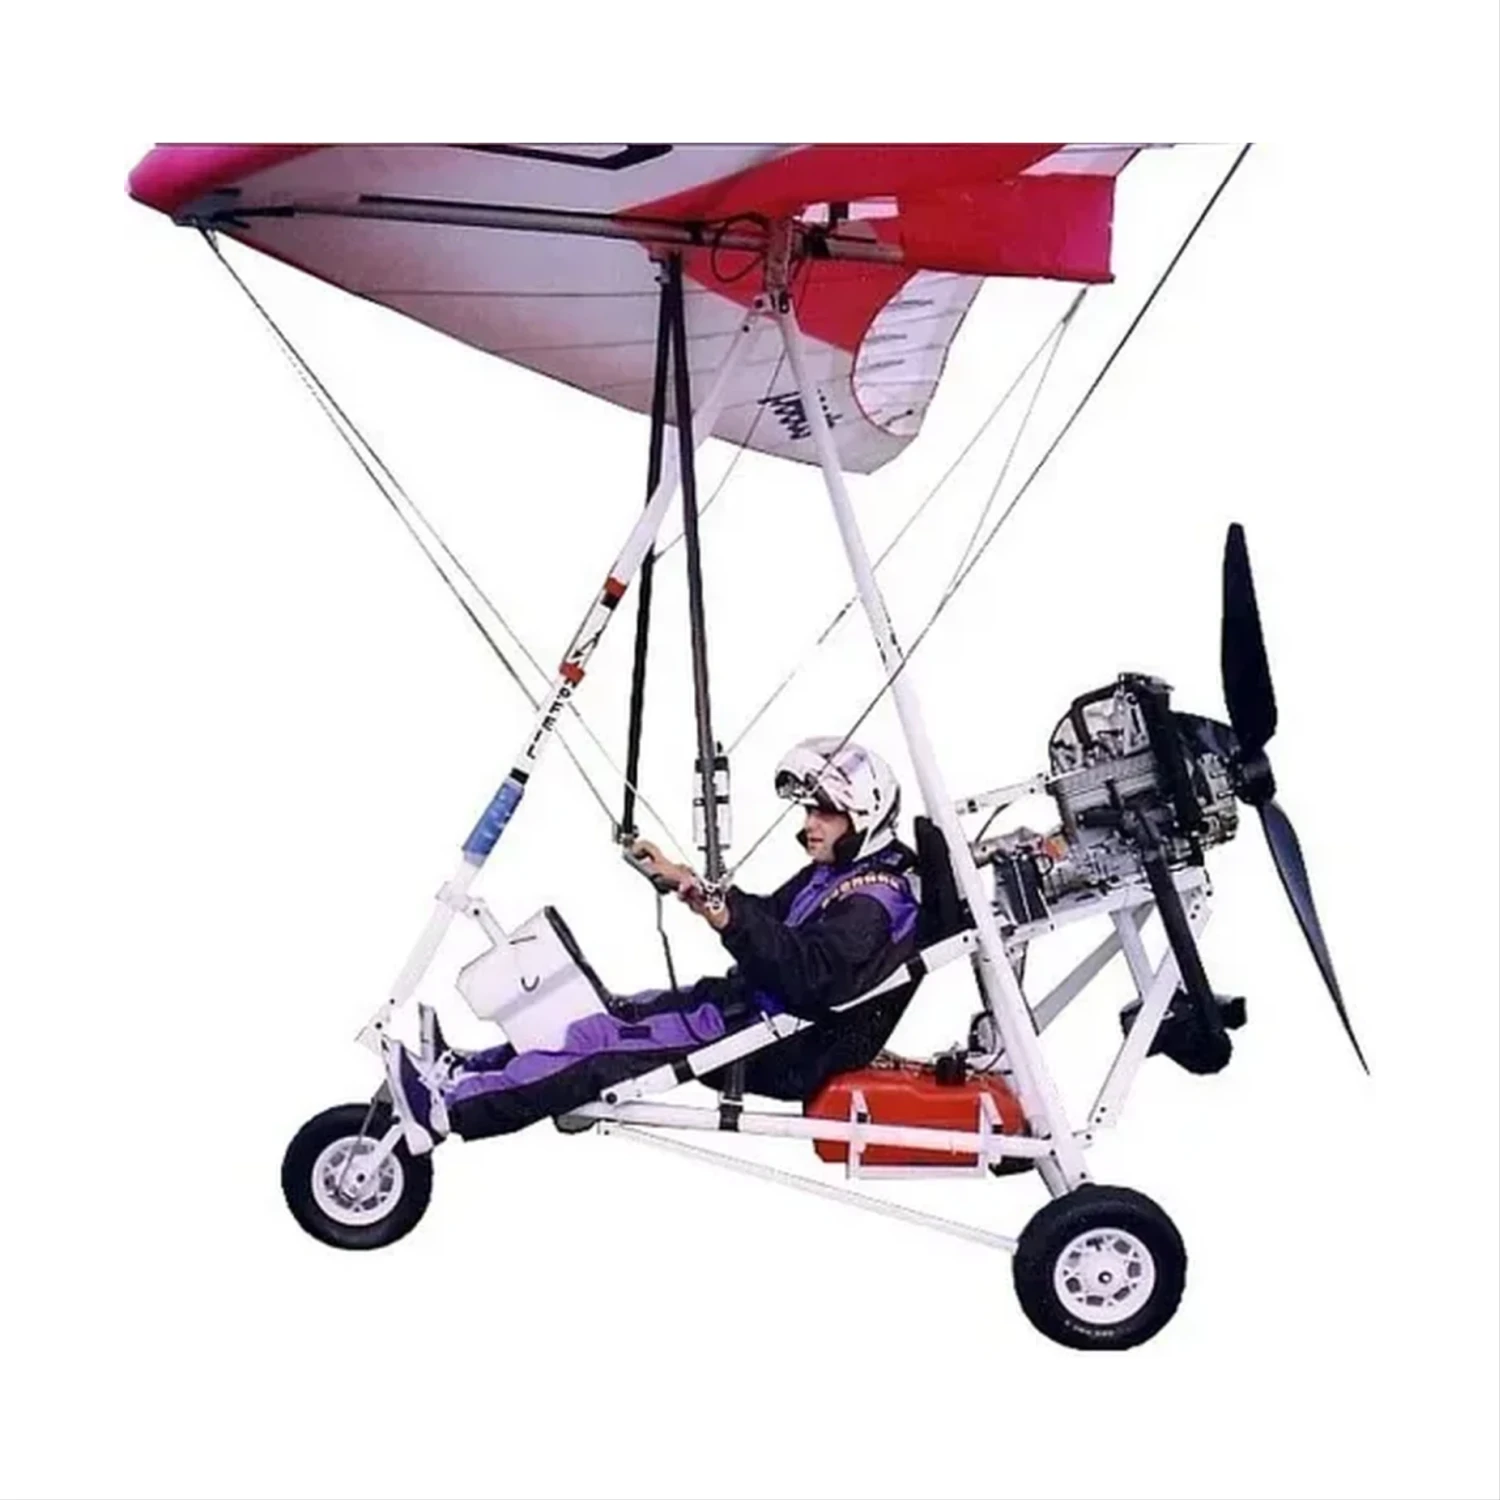 Airpfeil - Trike by UL - Flugzeugbau Quander